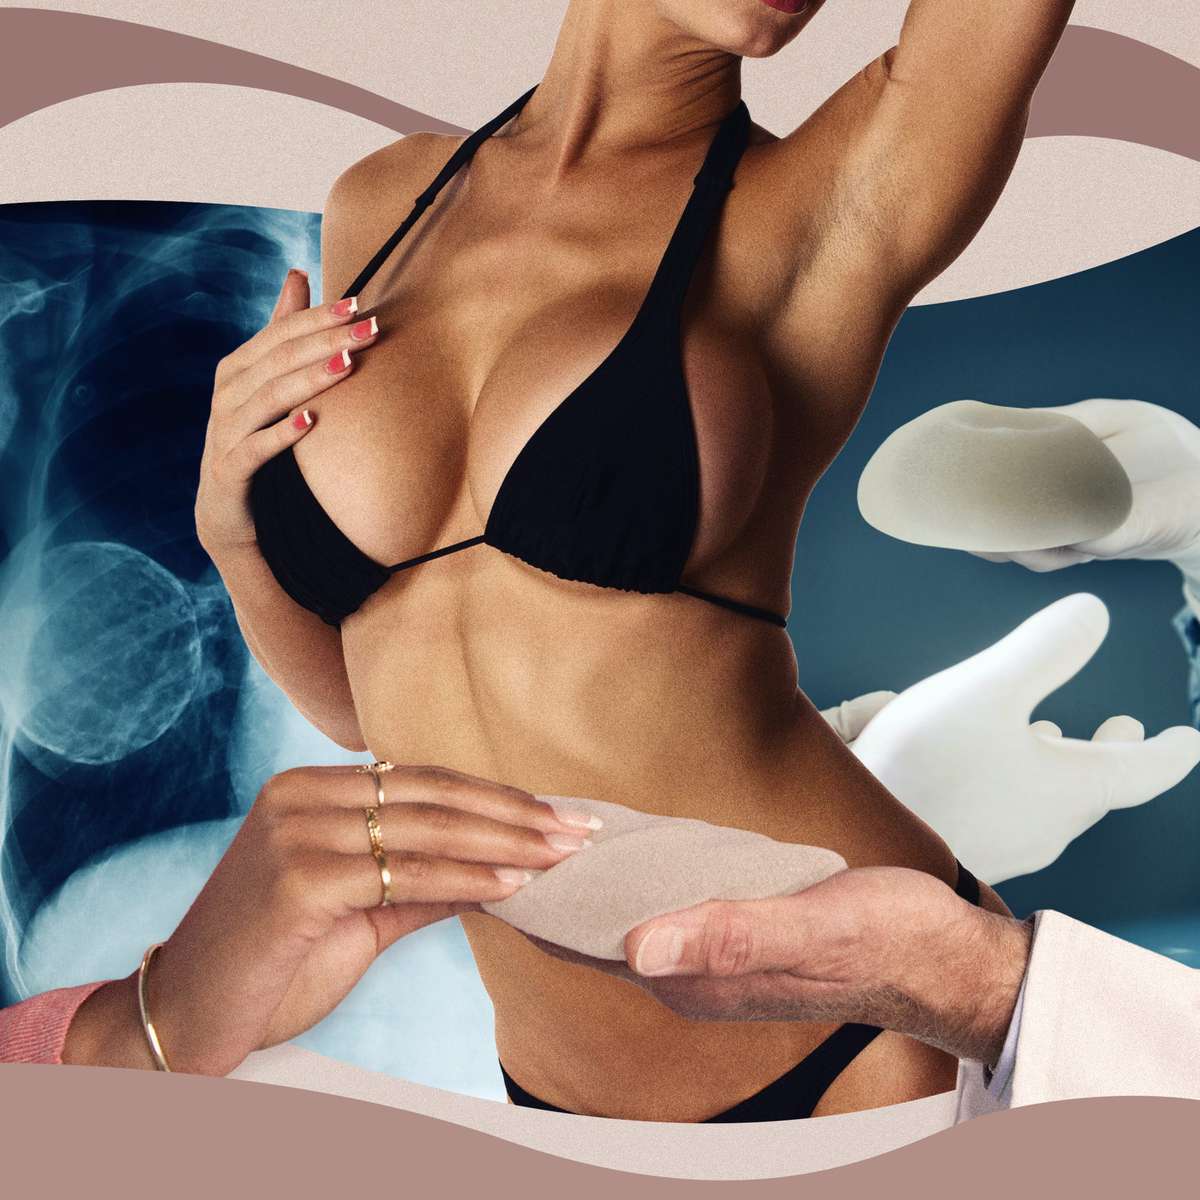 Natural vs fake looking breast implants